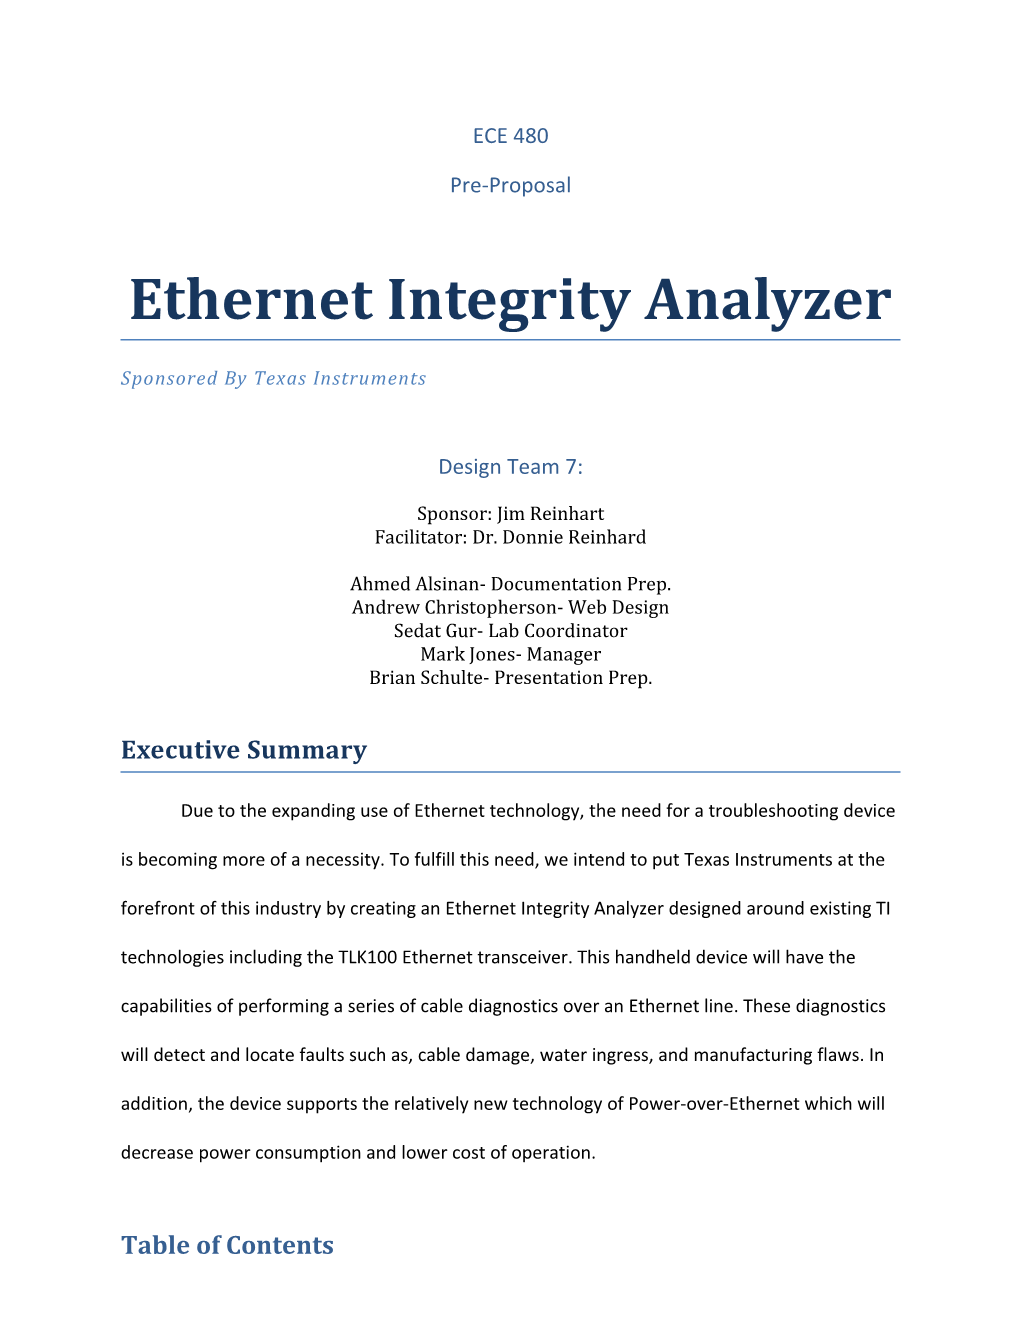 Ethernet Integrity Analyzer